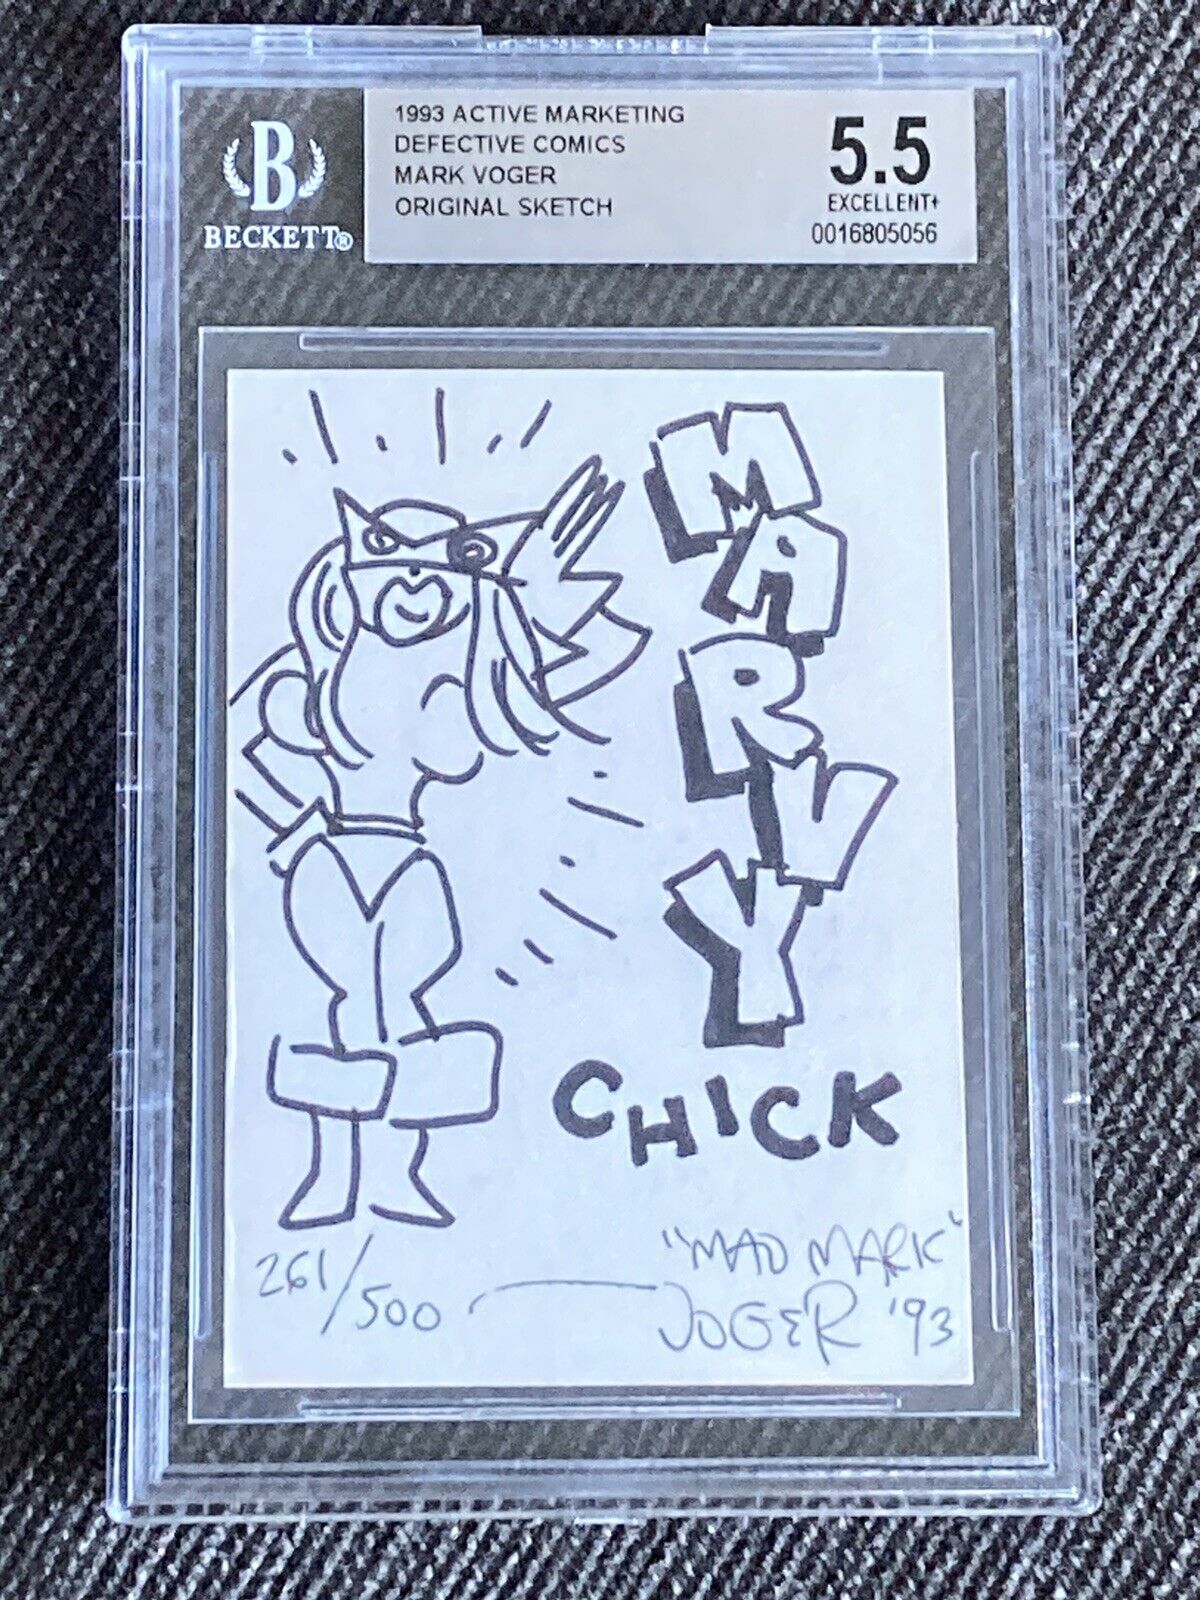 1993 Defective Comics Mark Voger Sketch Card Pop 1 - THE FIRST SKETCH CARD EVER